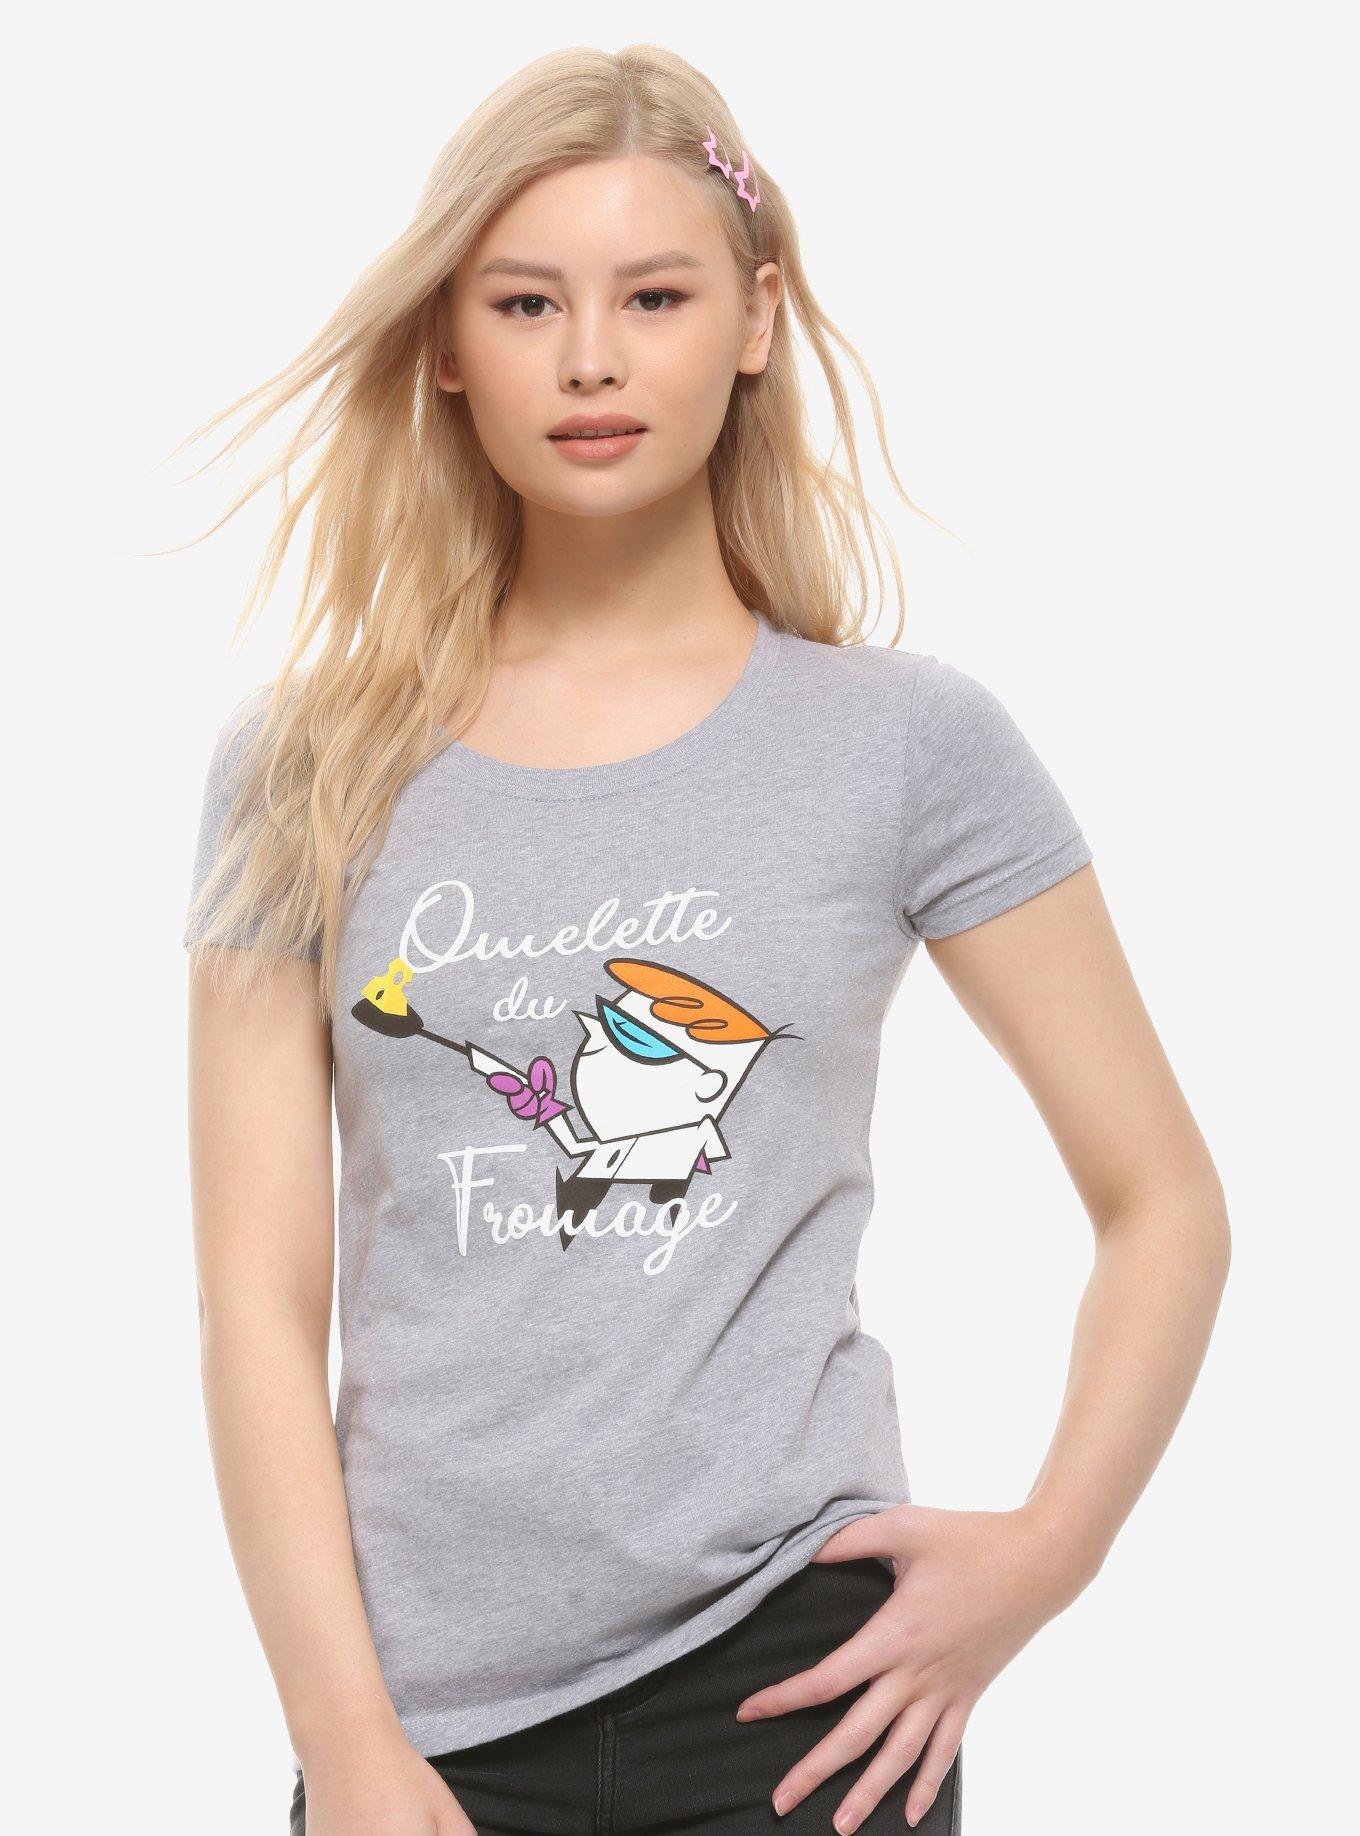 Dexter's Laboratory Omelette Du Fromage Girls T-Shirt, MULTI, hi-res